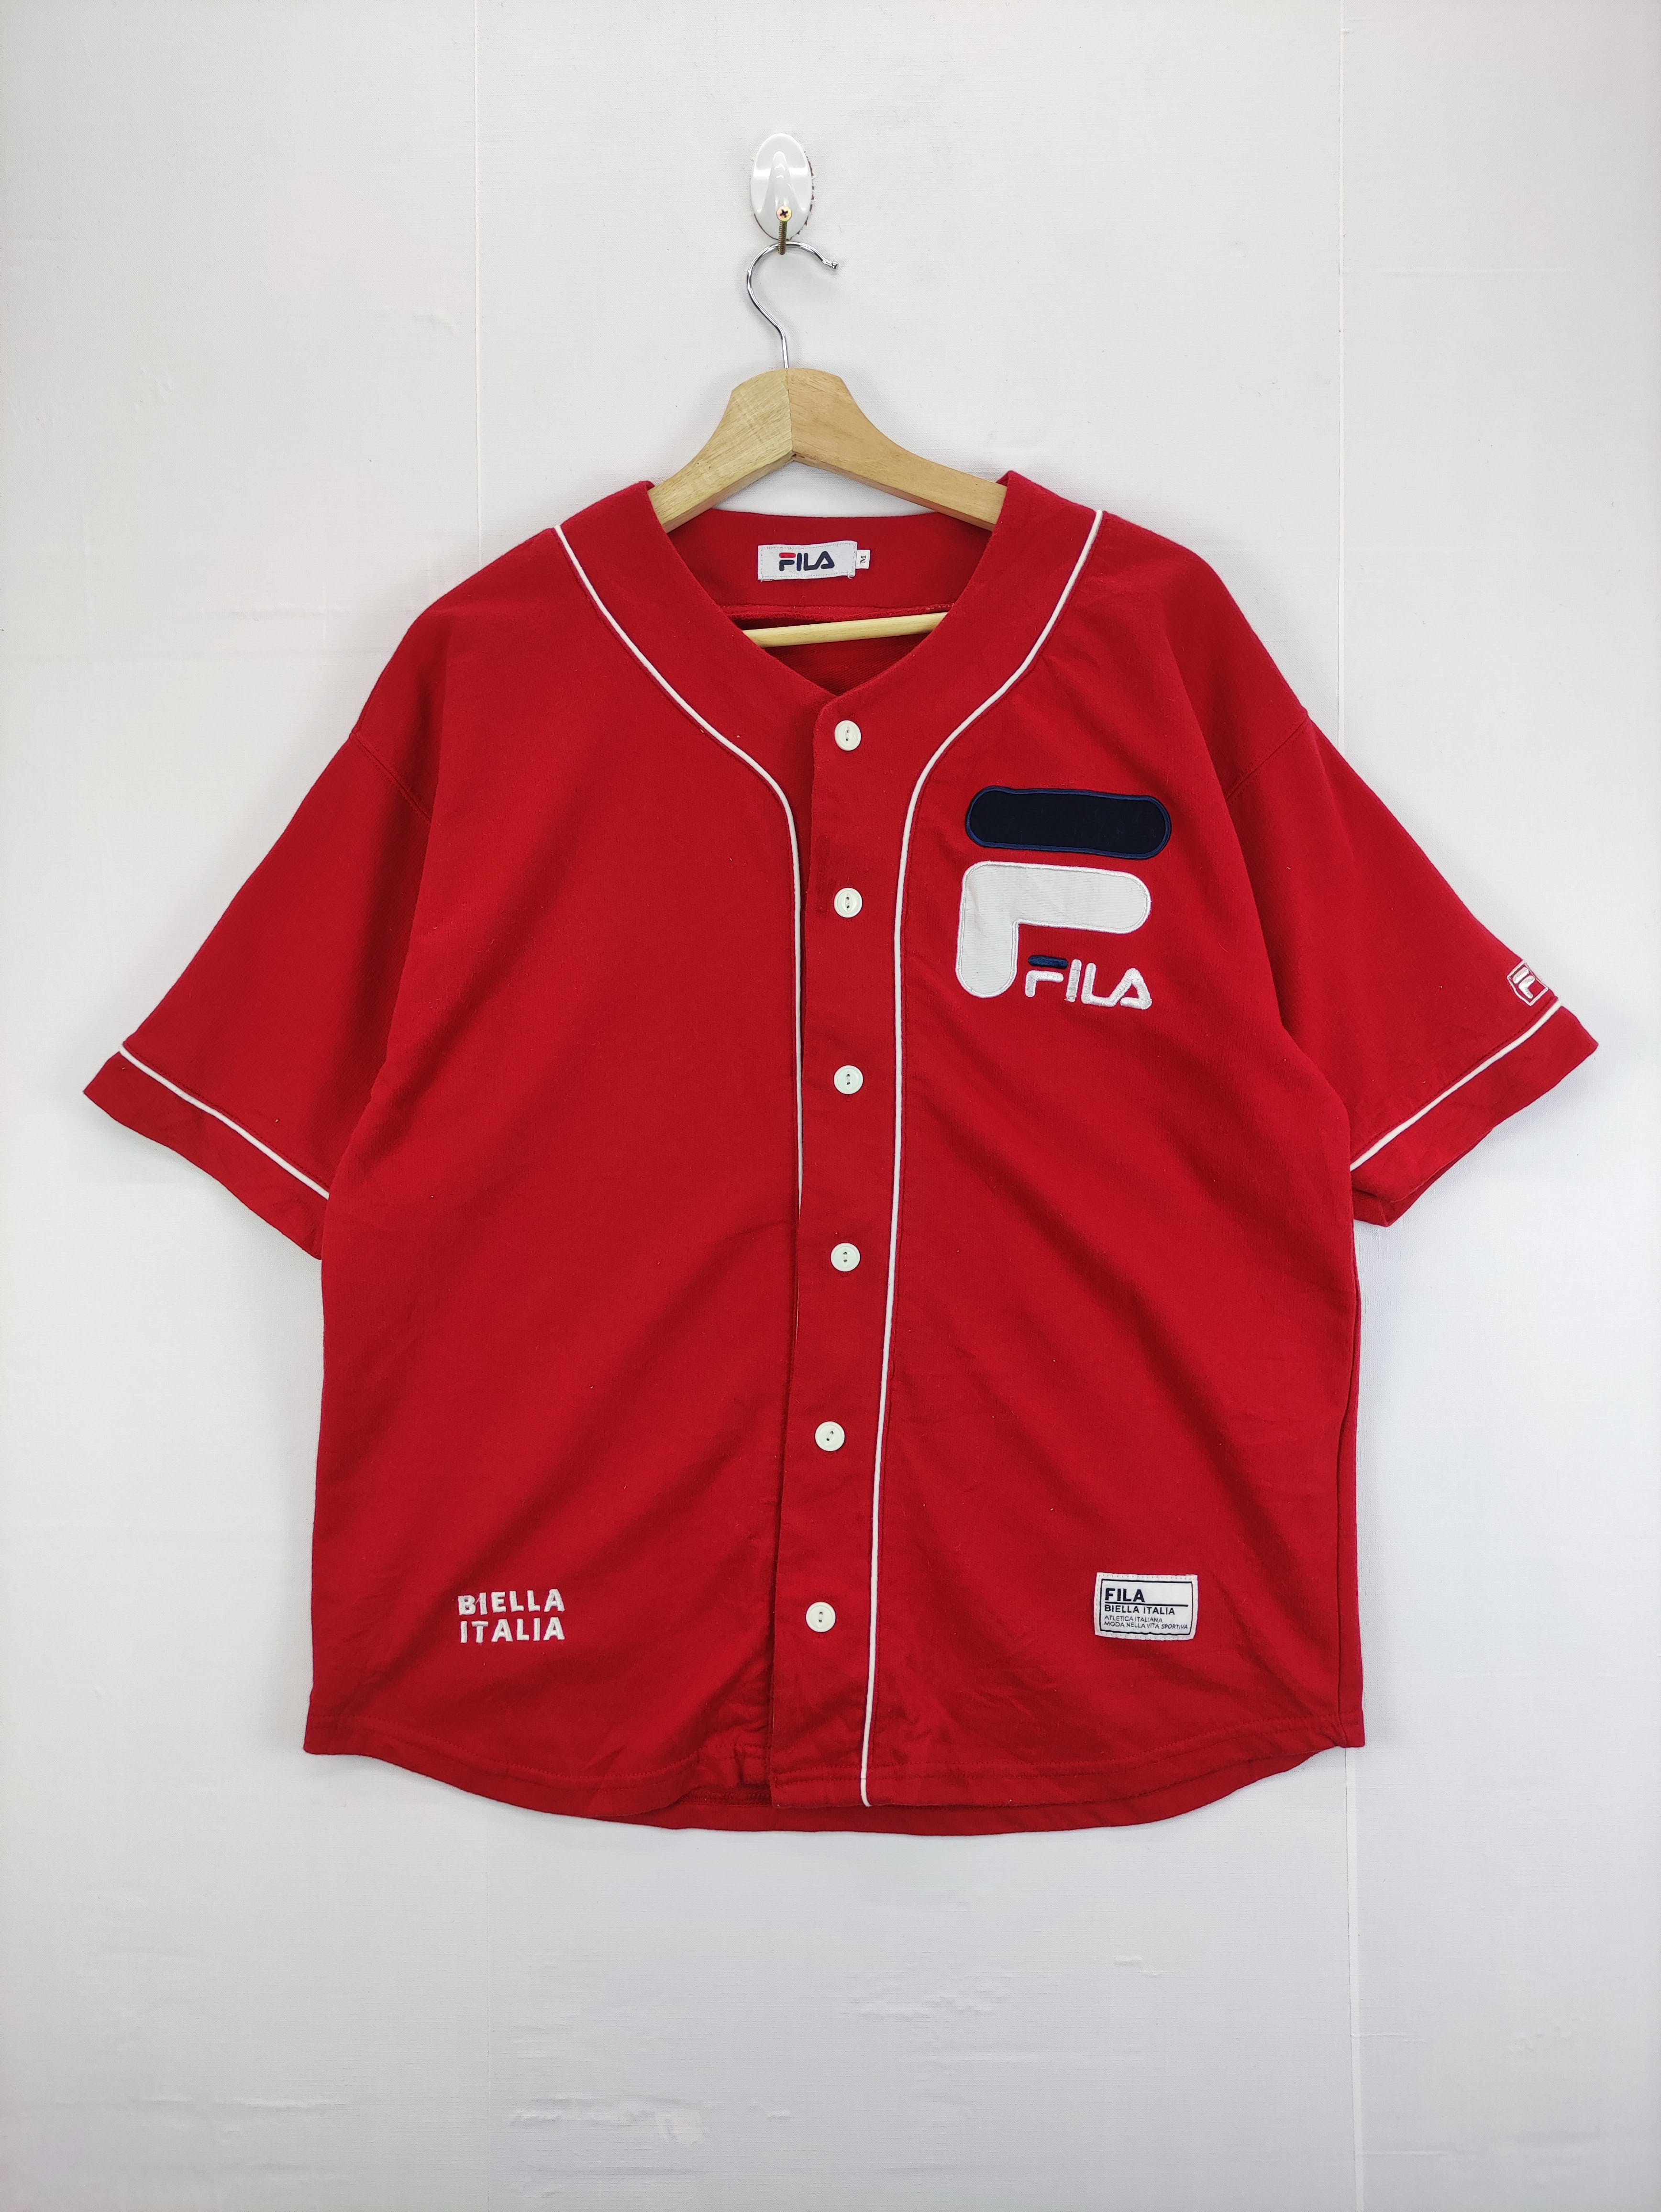 Vintage Fila Shirts Button Ups - 1